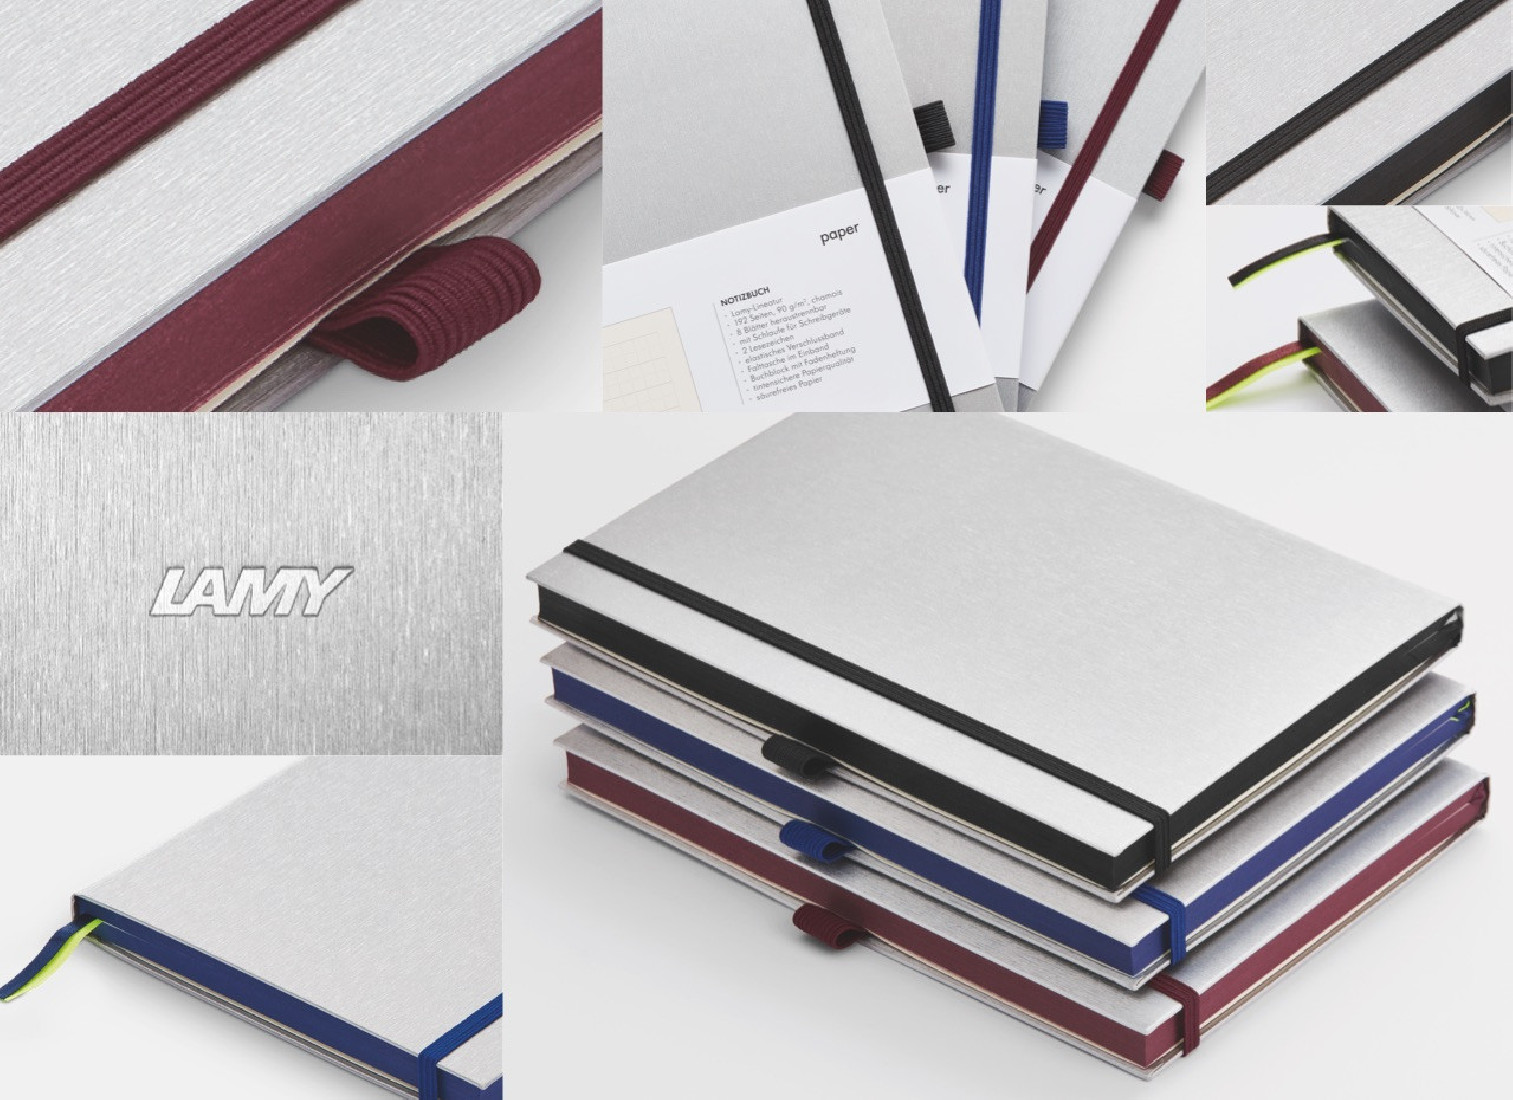 Lamy notebook hard cover silver black elastic A6 (10,2x14,4cm) 4034267